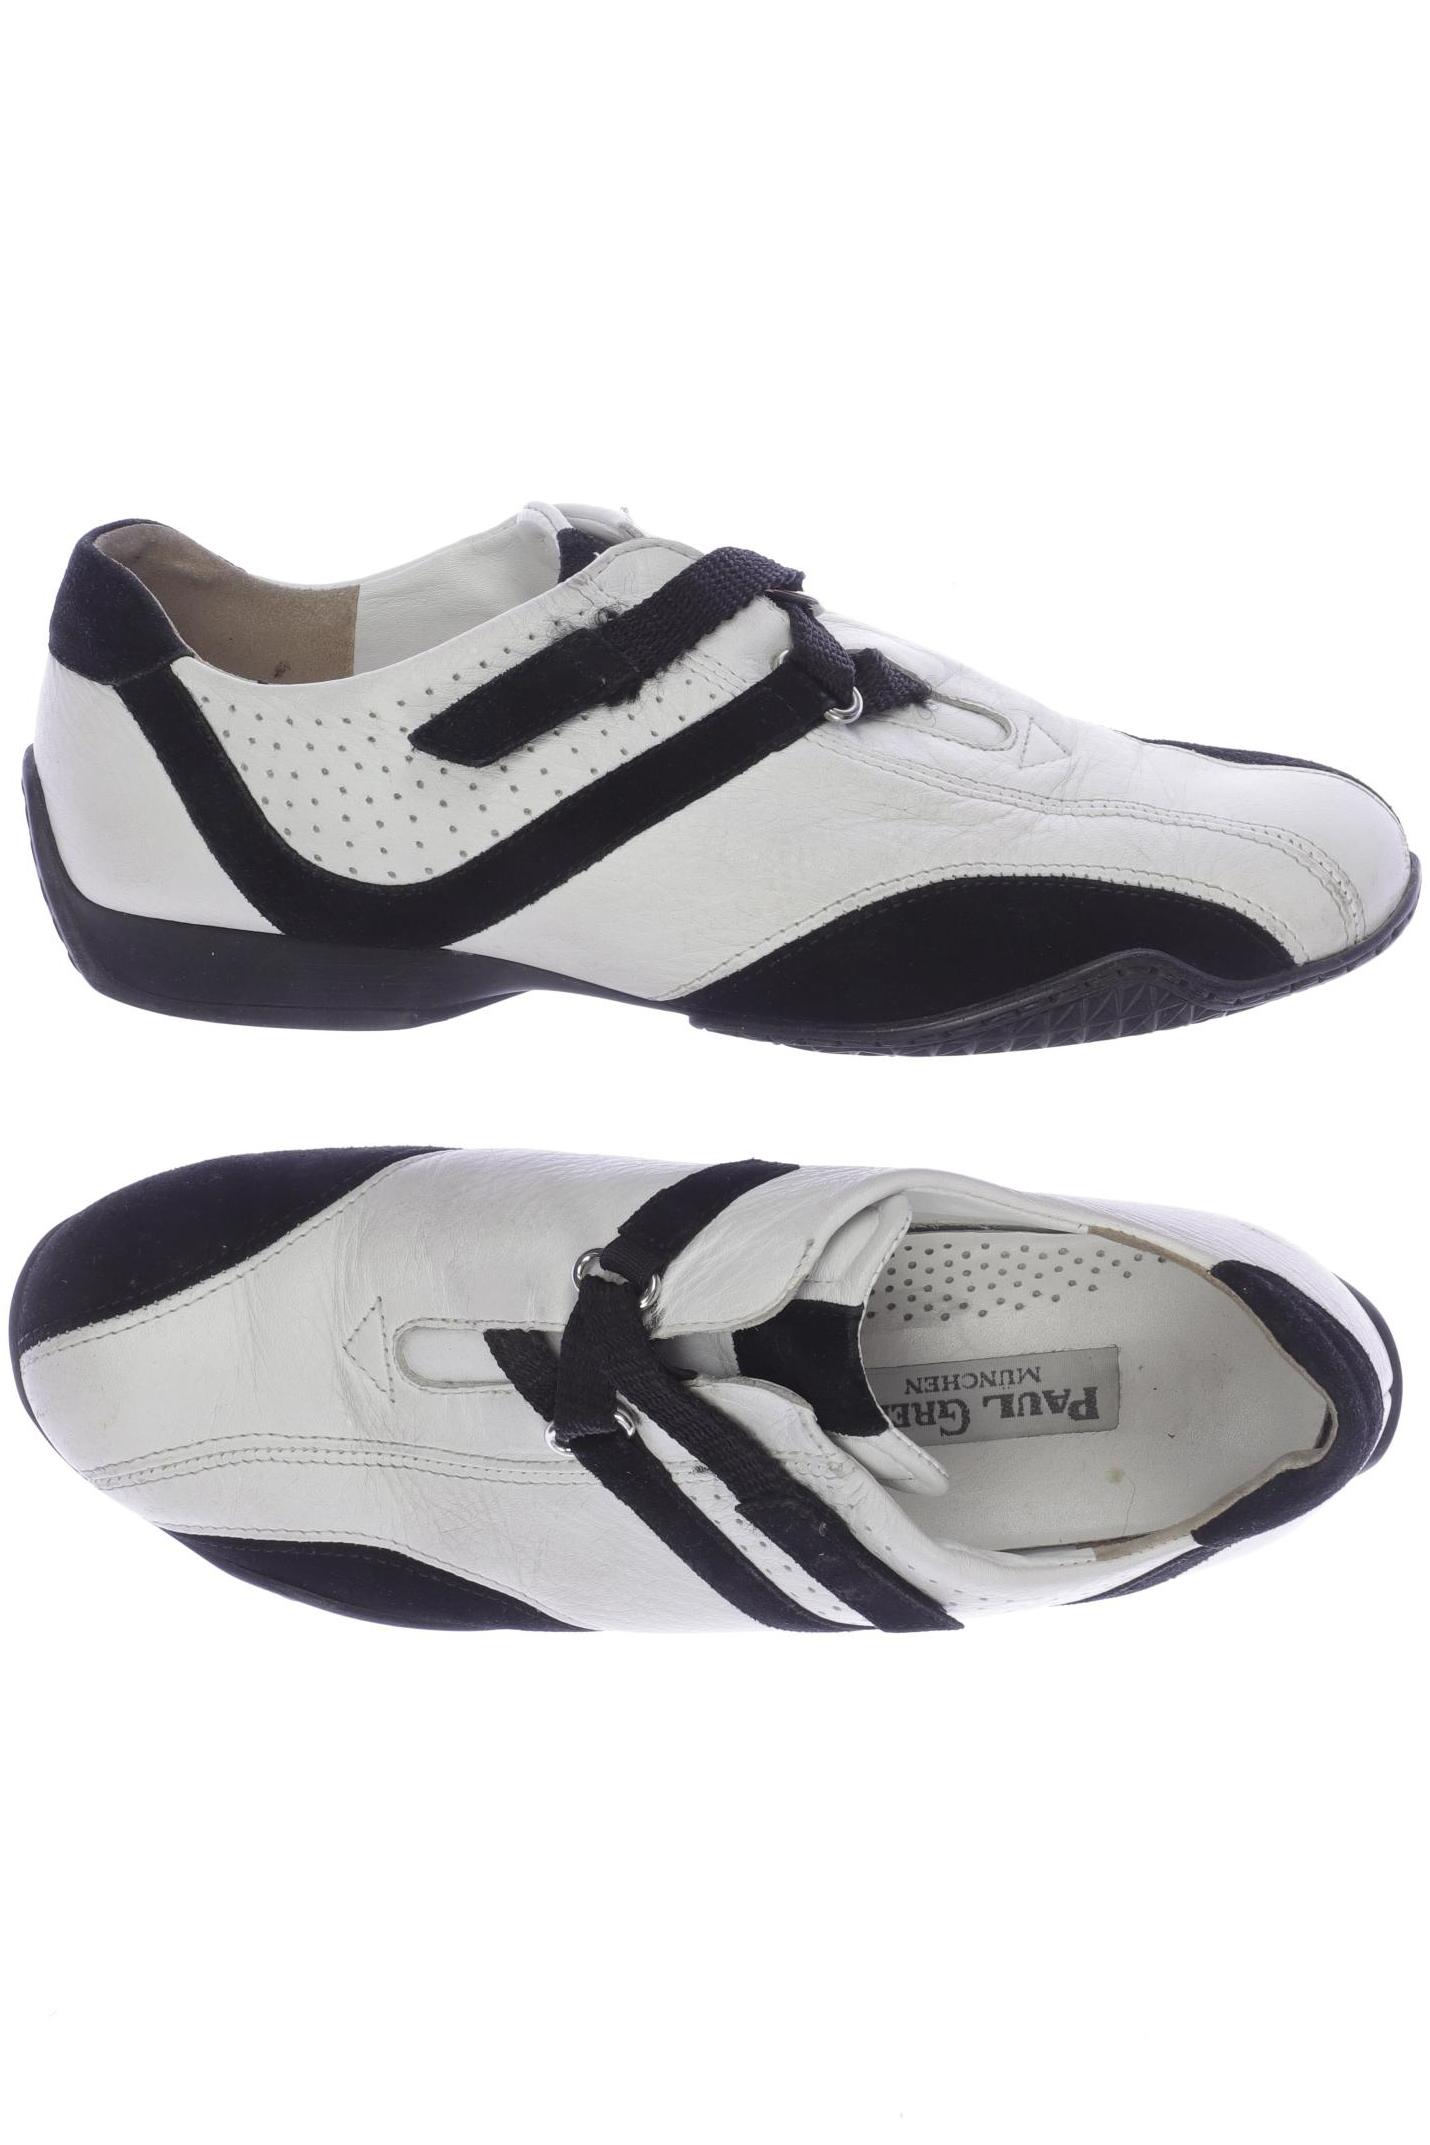 Paul Green Damen Sneakers, weiß, Gr. 4.5 von Paul Green